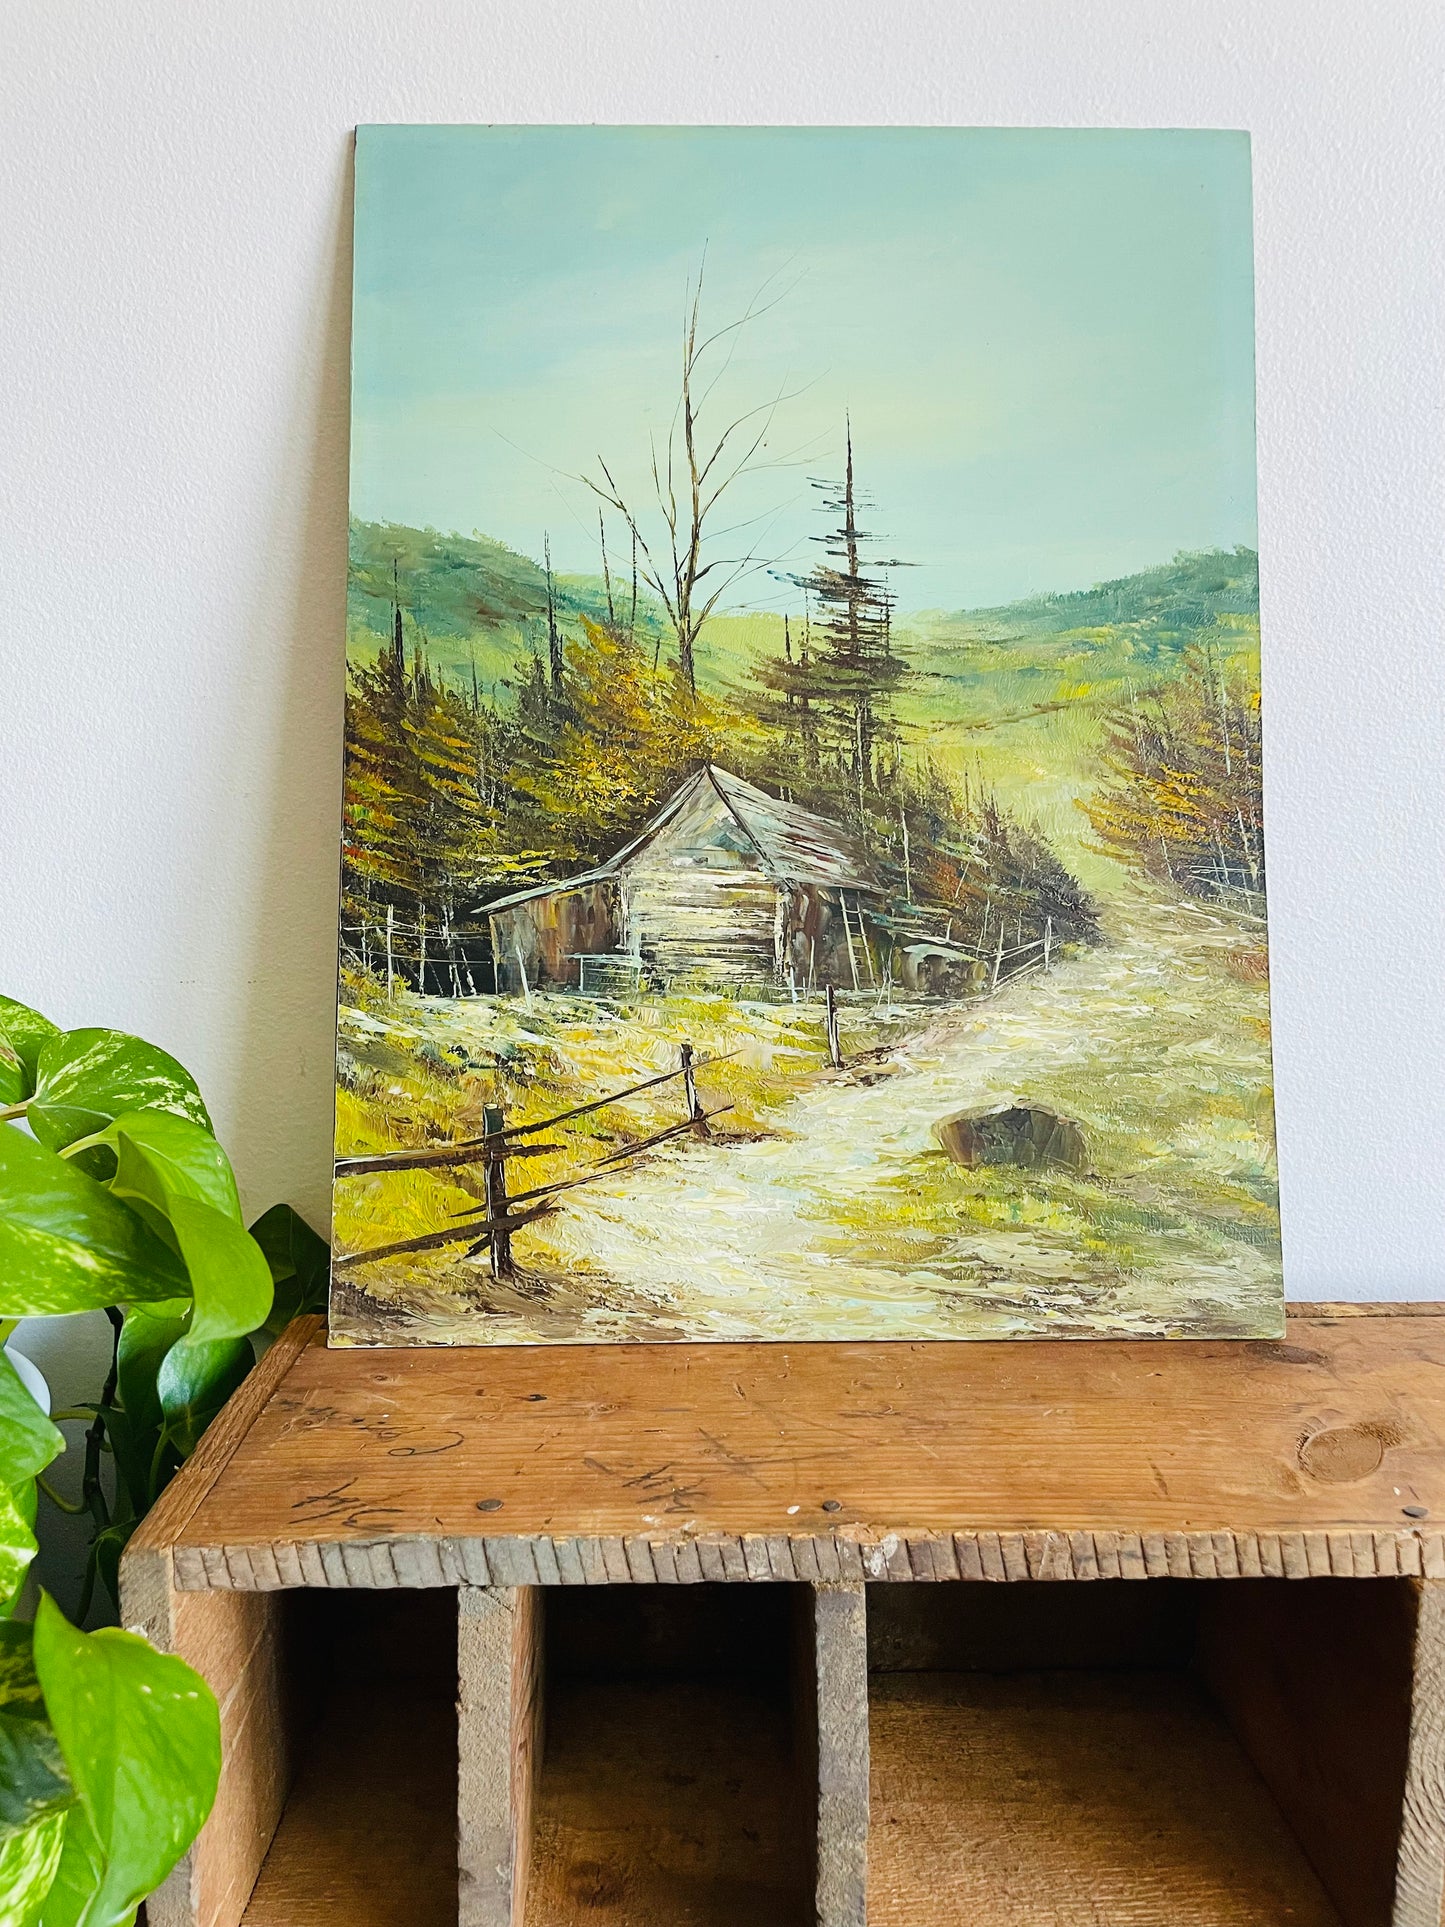 Original Art Oil Painting on Board - Rustic Barn or Cabin in Nature Scene